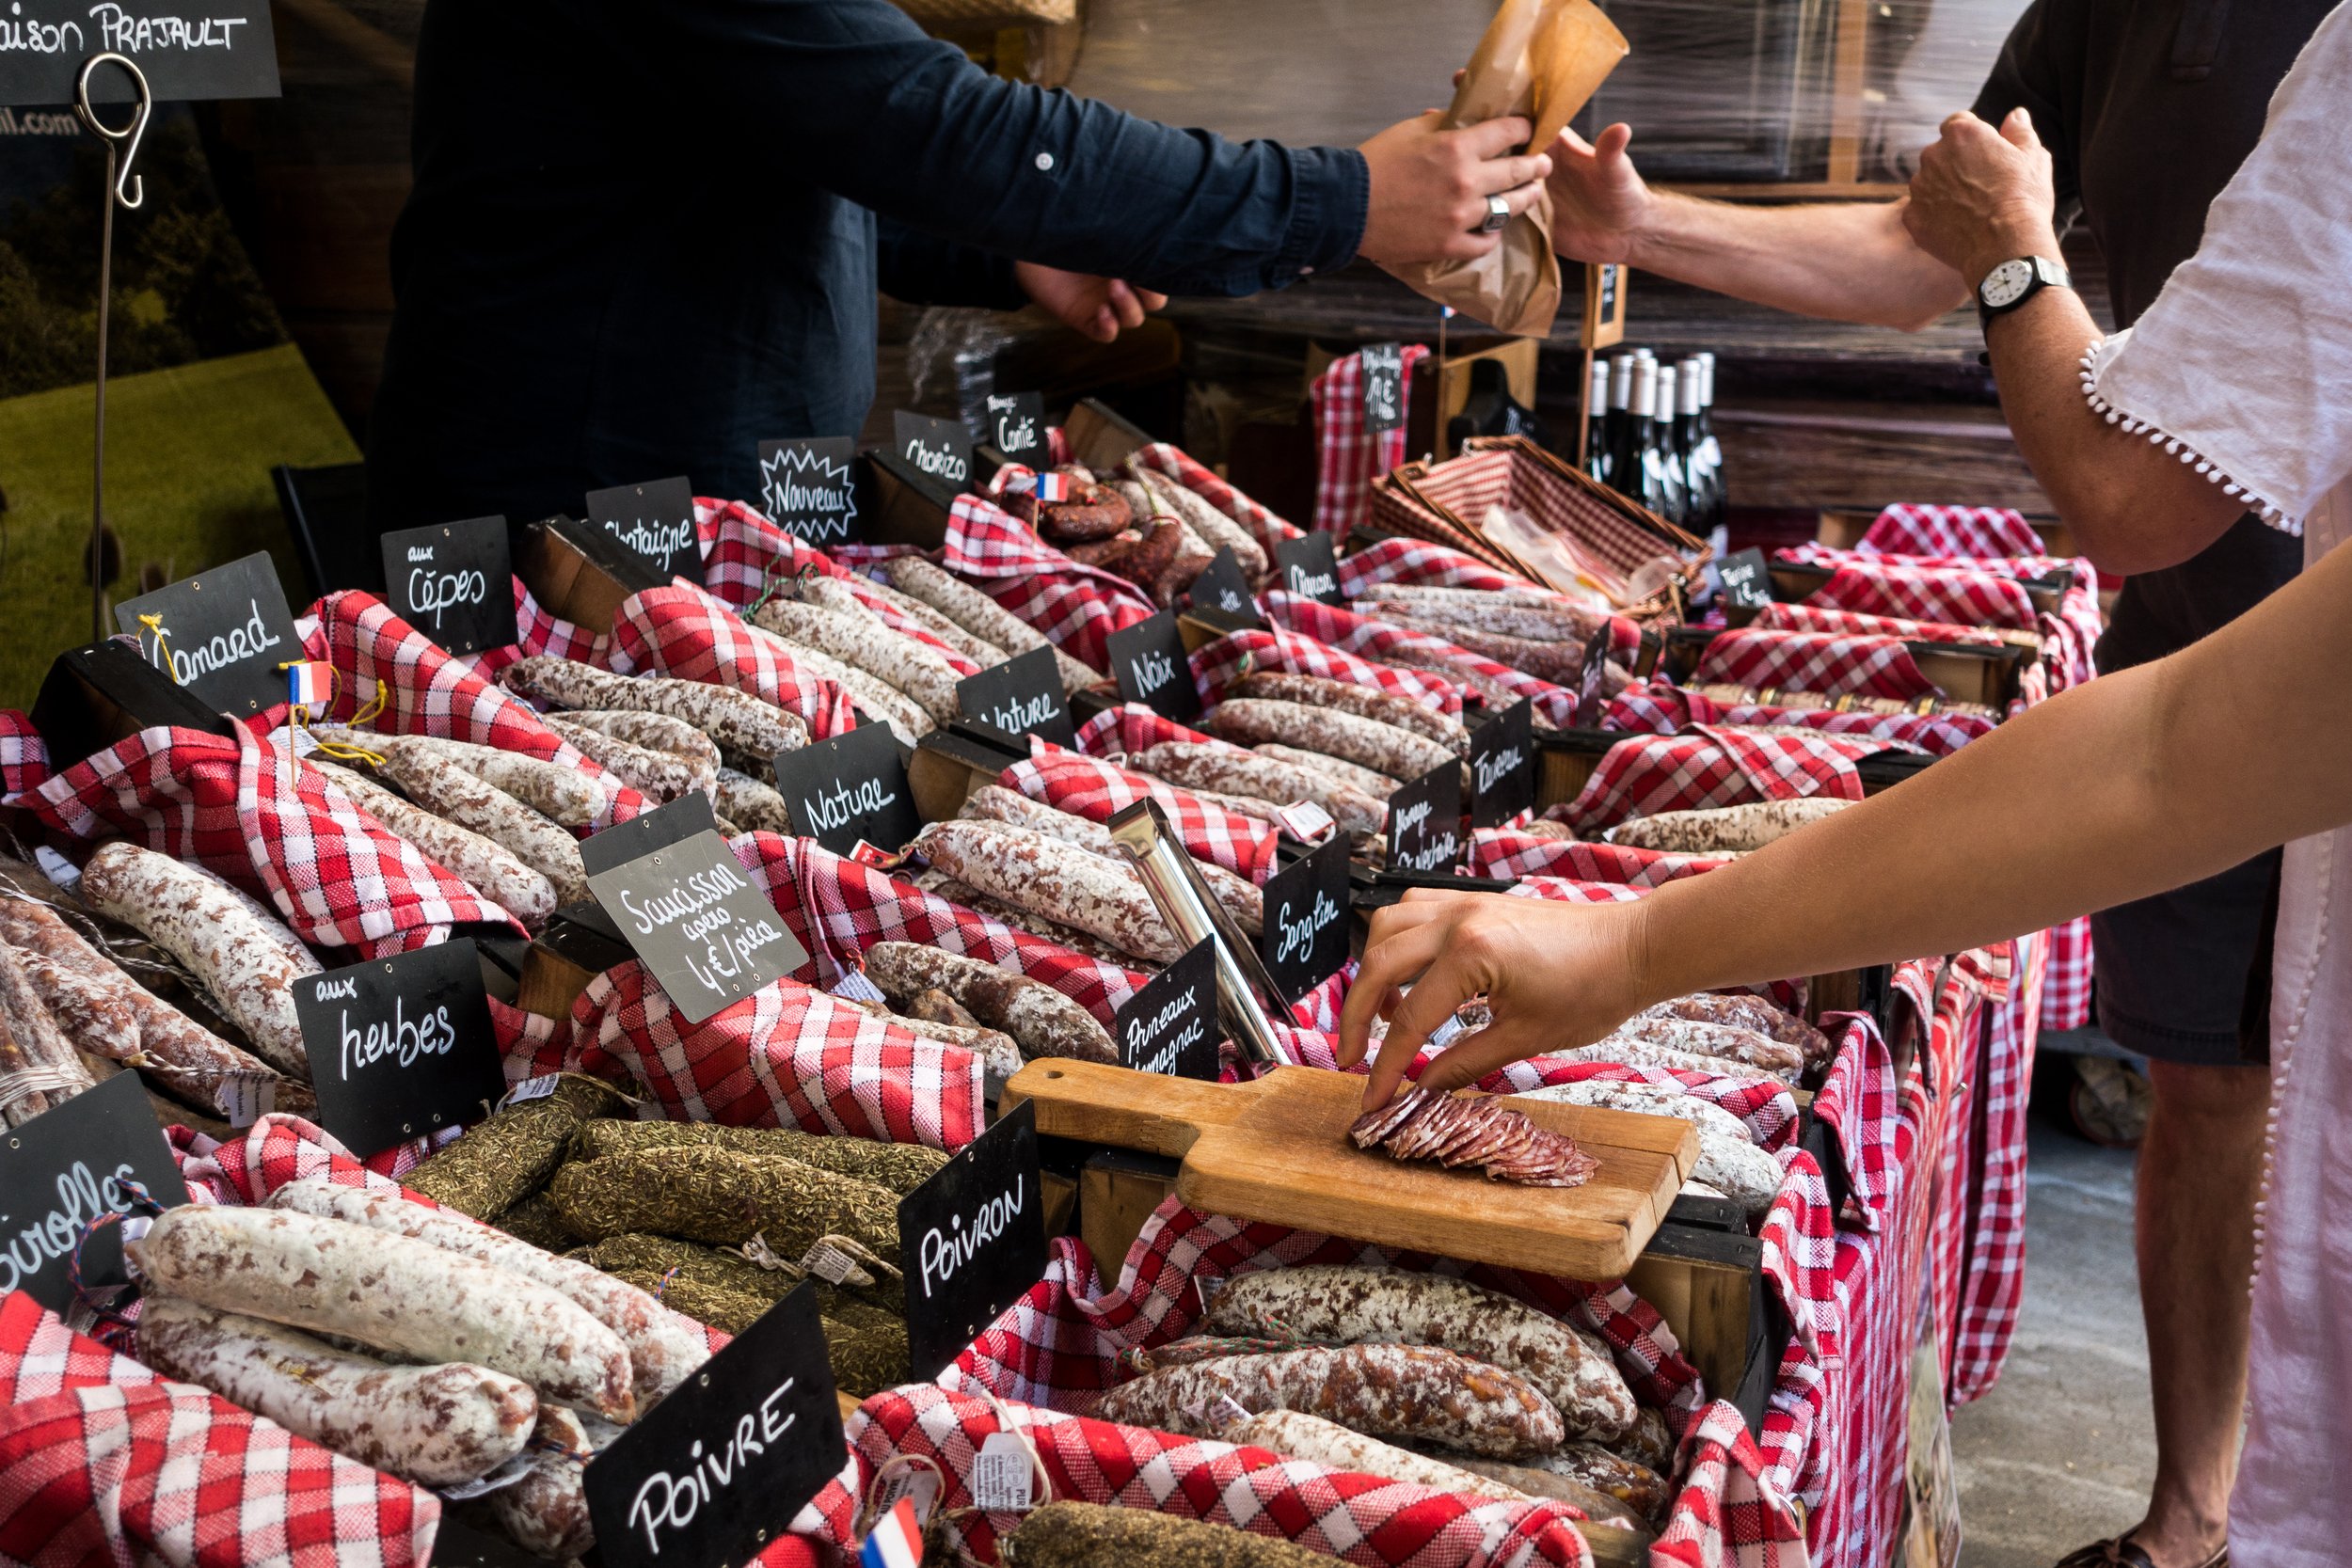 tasting-dried-fuet-salami-at-french-market-2021-08-26-18-36-41-utc.jpg